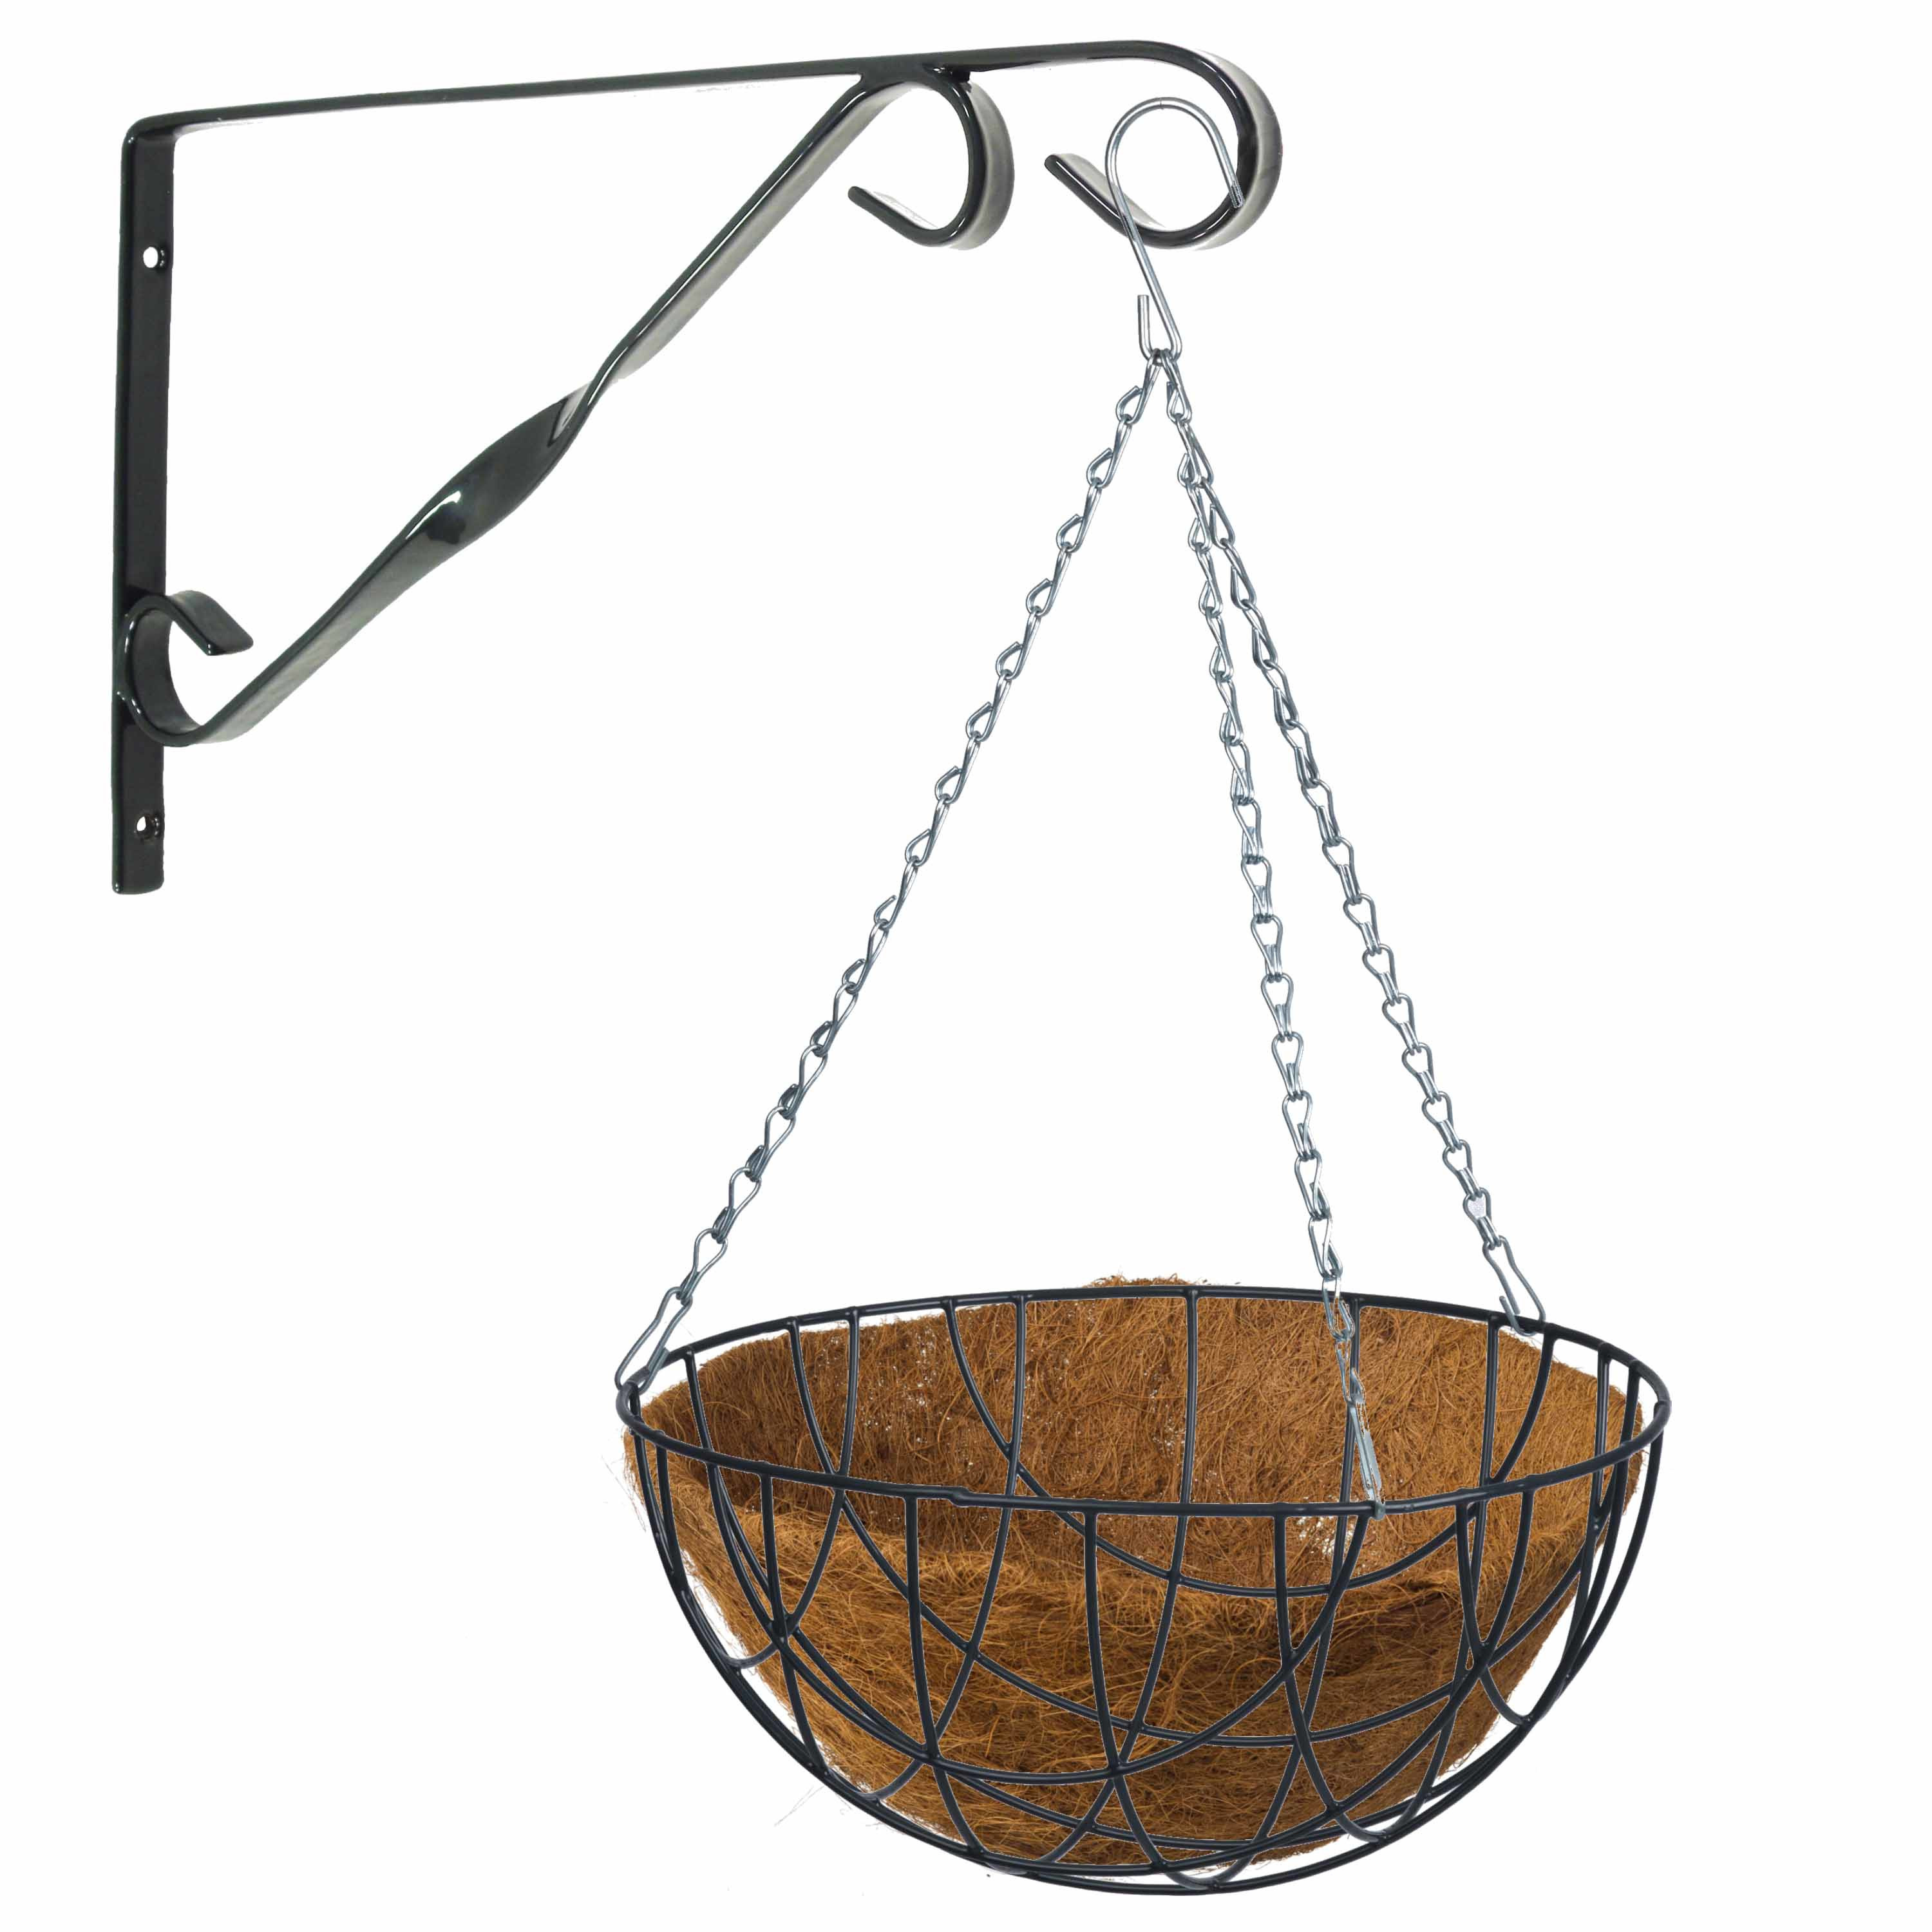 Hanging basket met klassieke muurhaak zwart en kokos inlegvel metaal complete hanging basket set